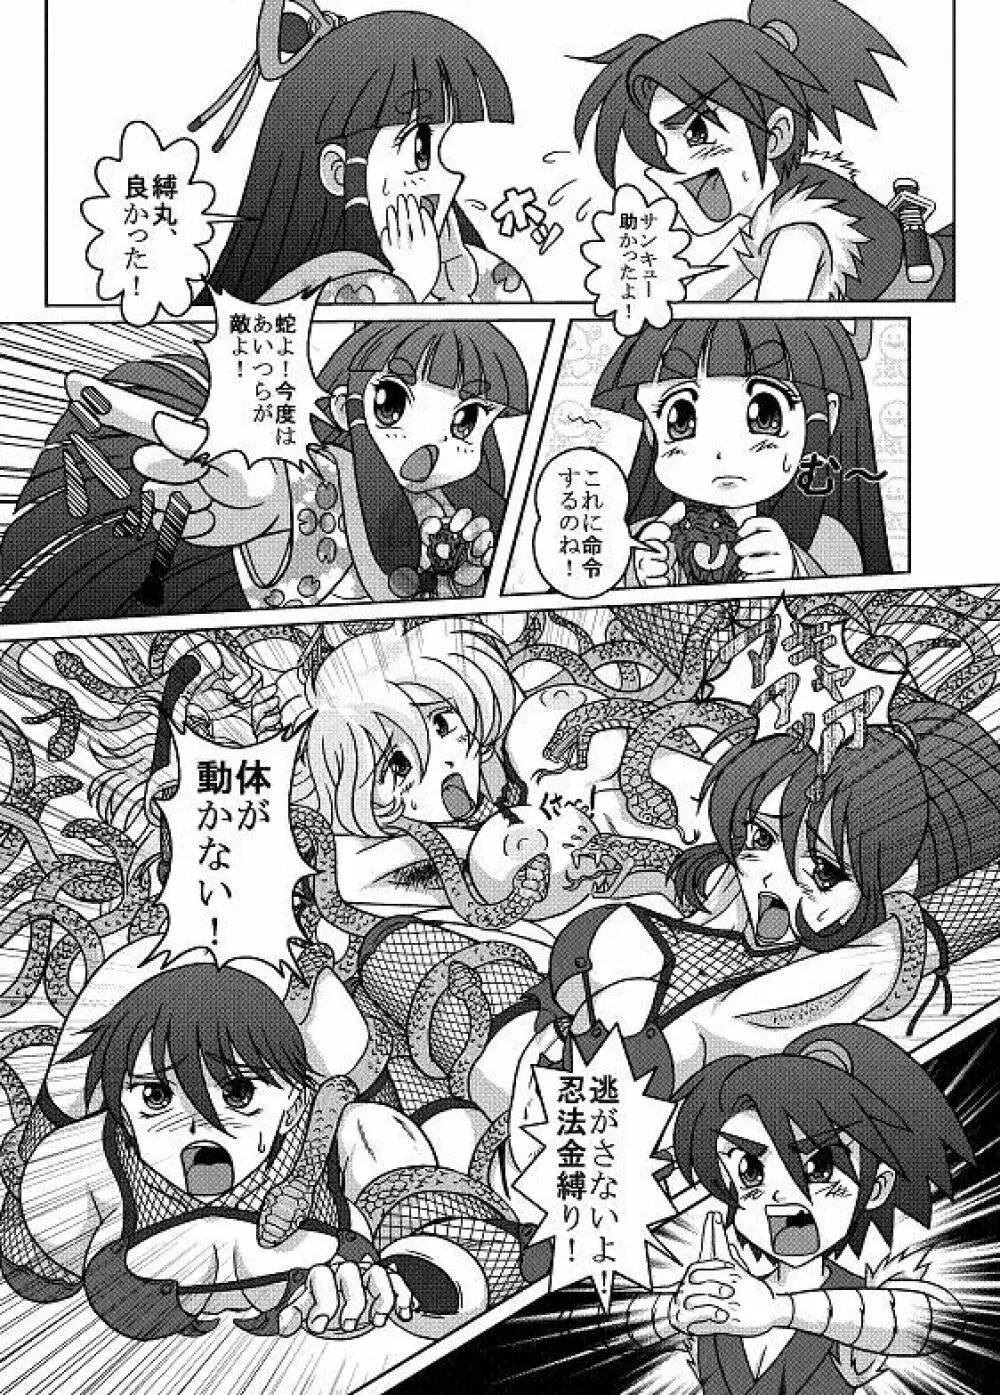 Same-themed manga about kid fighting female ninjas from japanese imageboard. 42ページ